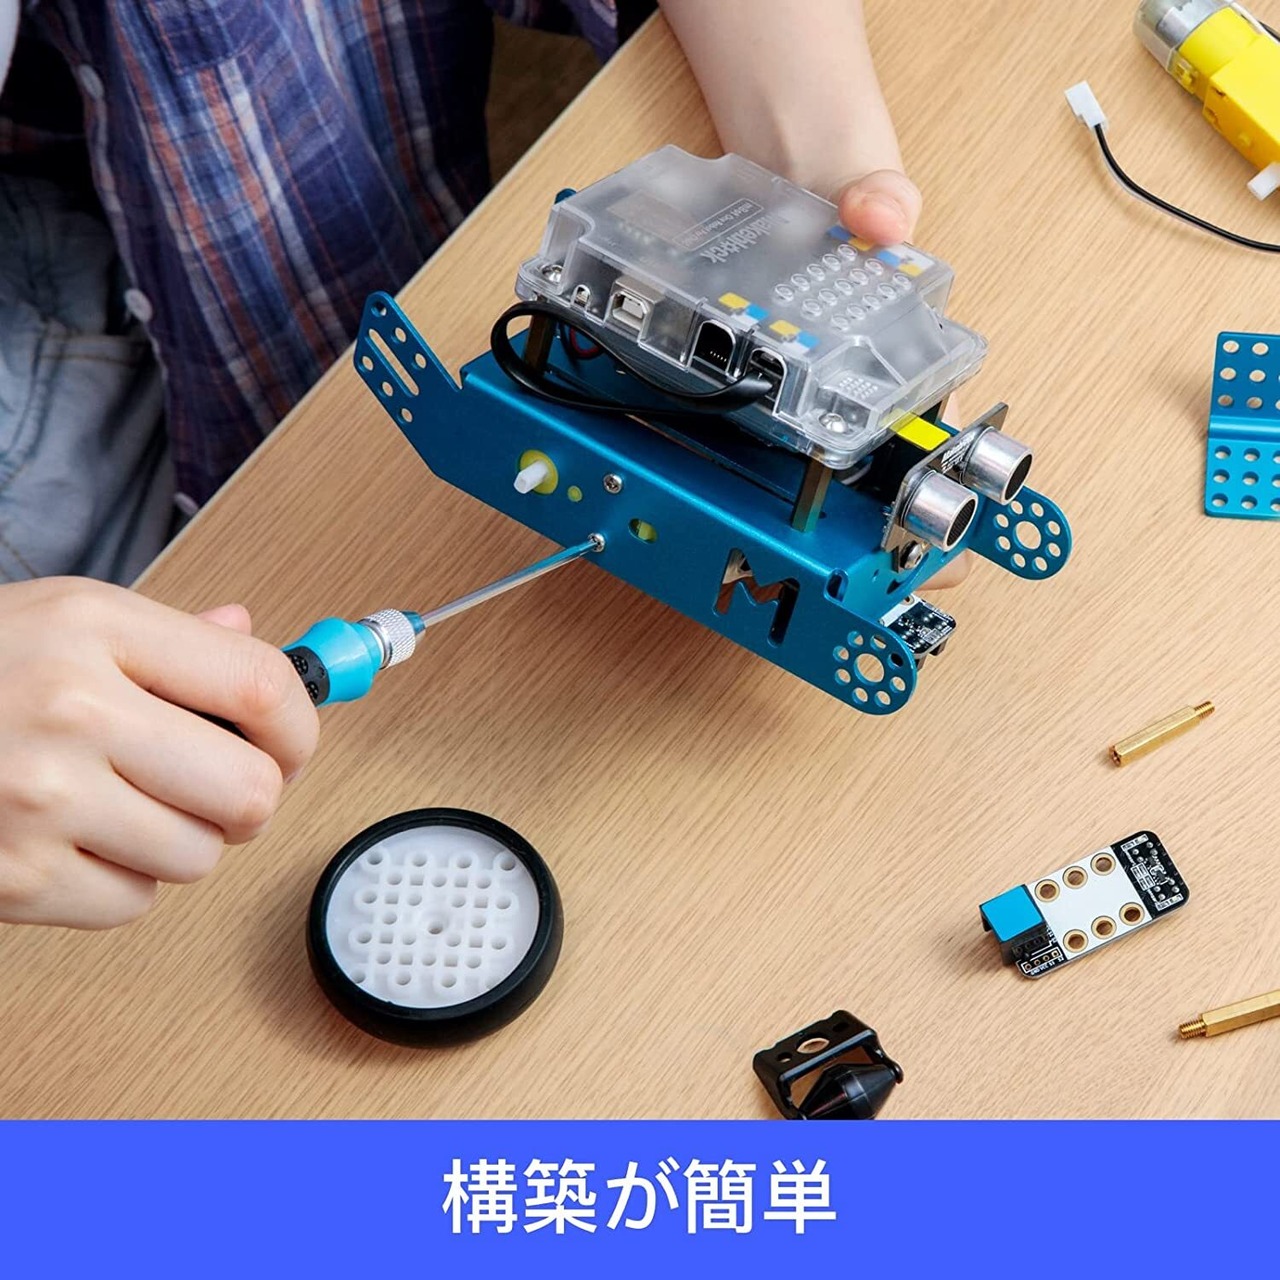 Makeblock mBot プログラミング ロボットキット STEM 知育玩具 Scratch Arduino 初心者向けロボットキットおもちゃ ロボット工学 電子工学 コーディング プログラミング 勉強 子どものギフト